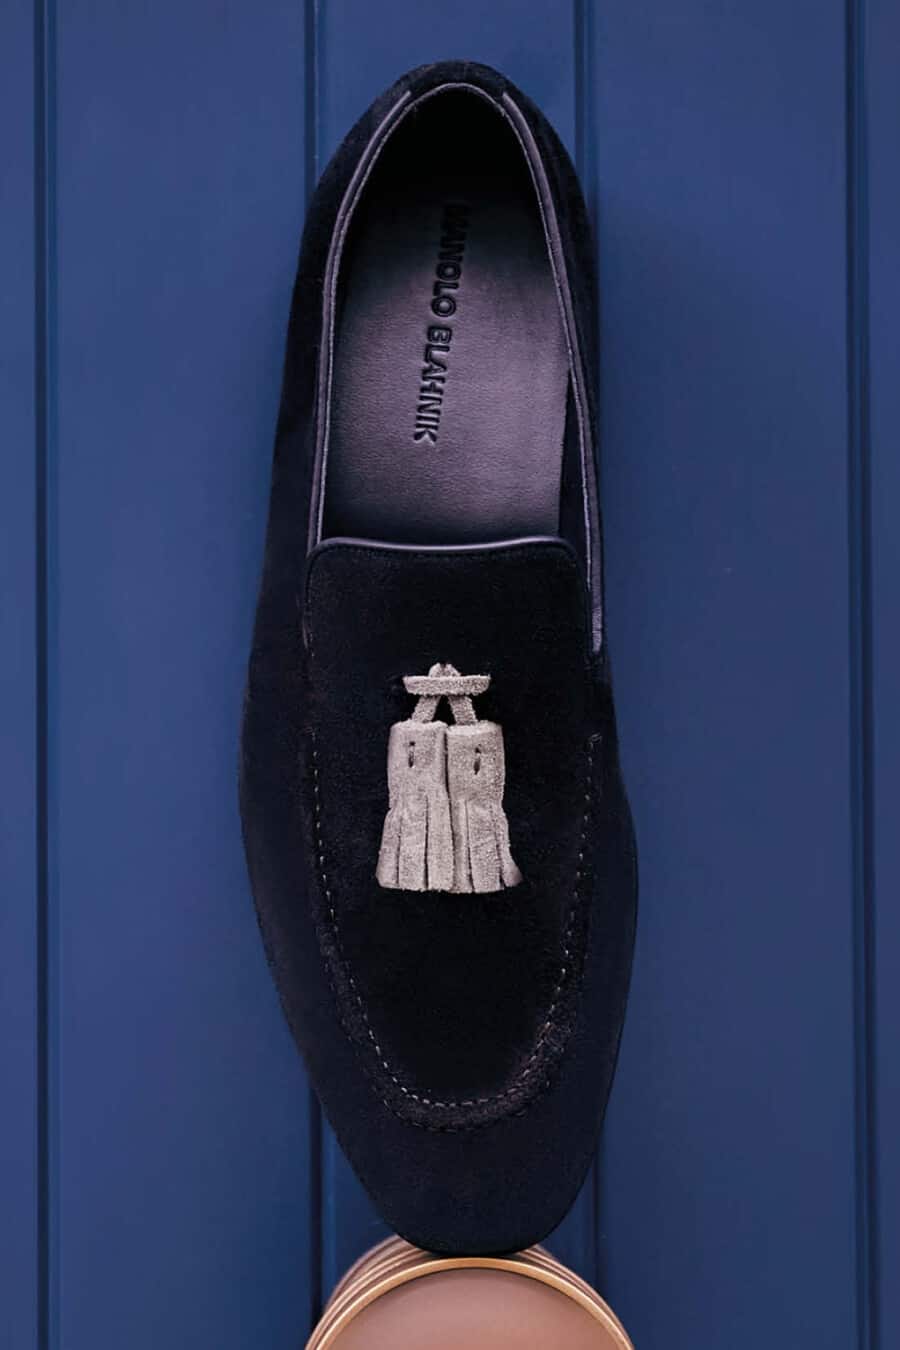 A luxury men's Manolo Blahnik black suede loafer with grey suede tassels